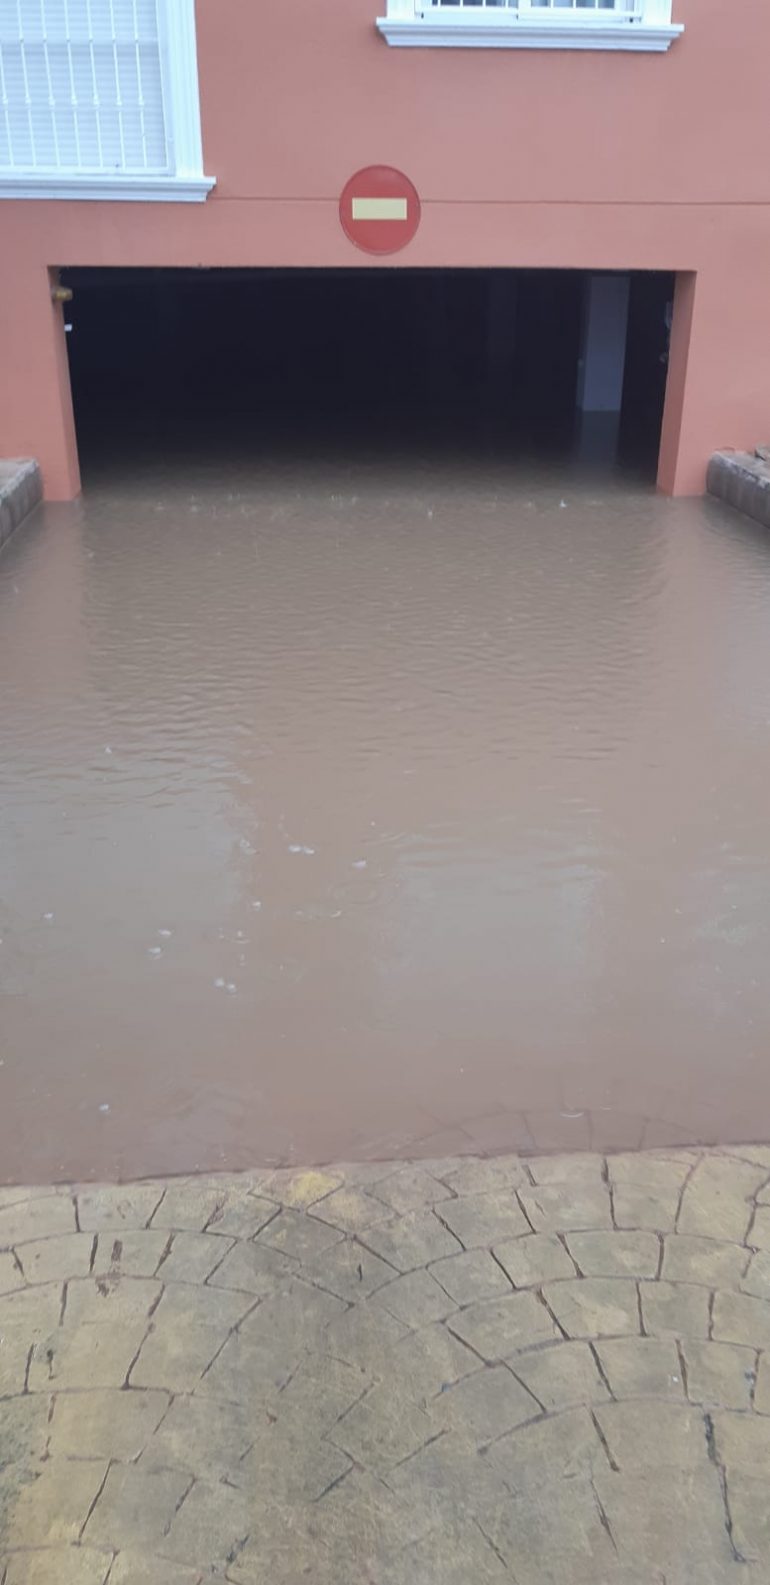 Fotos garaje inundado